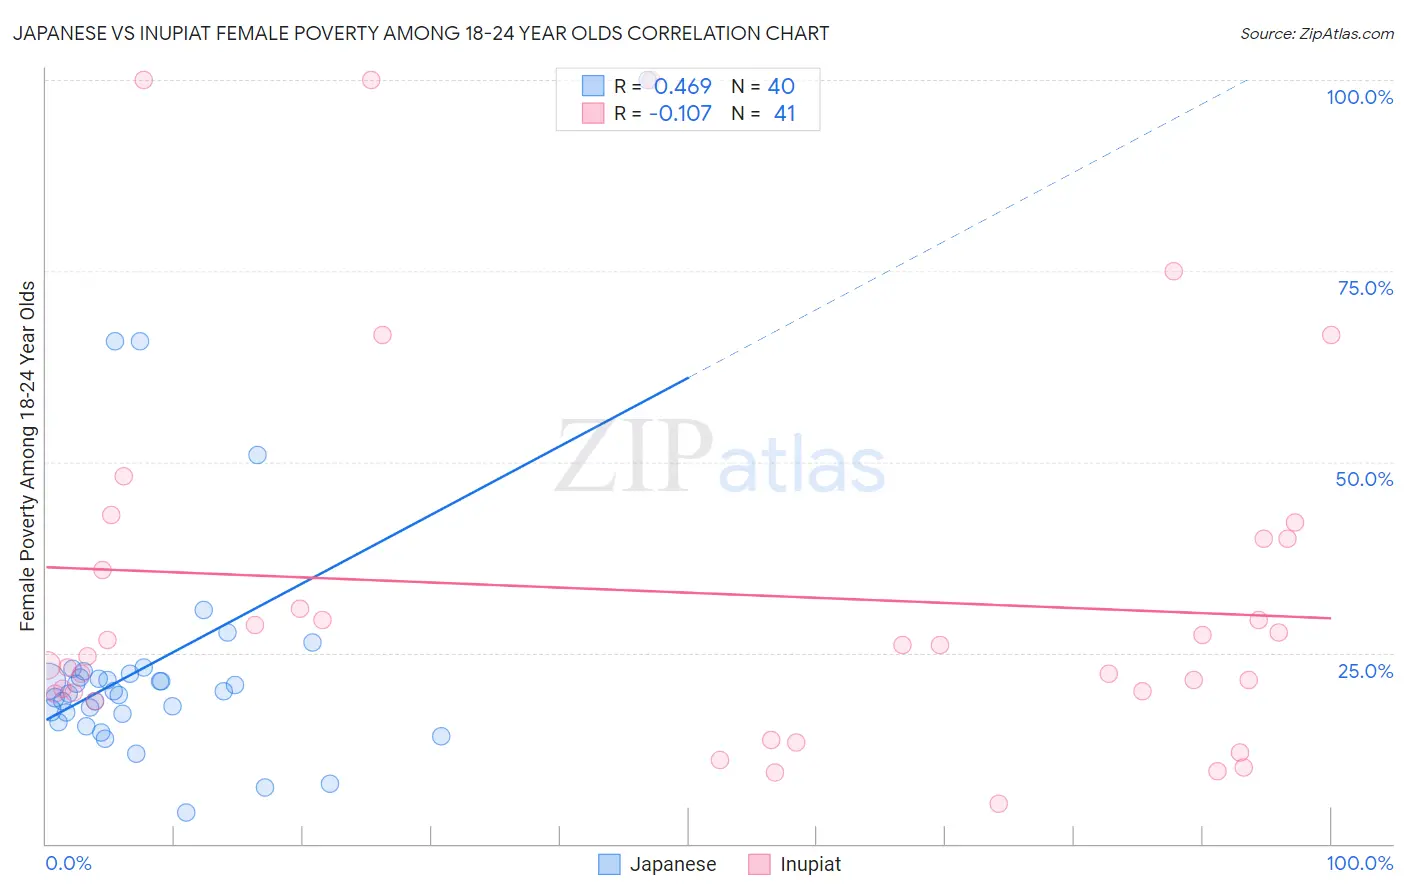 Japanese vs Inupiat Female Poverty Among 18-24 Year Olds